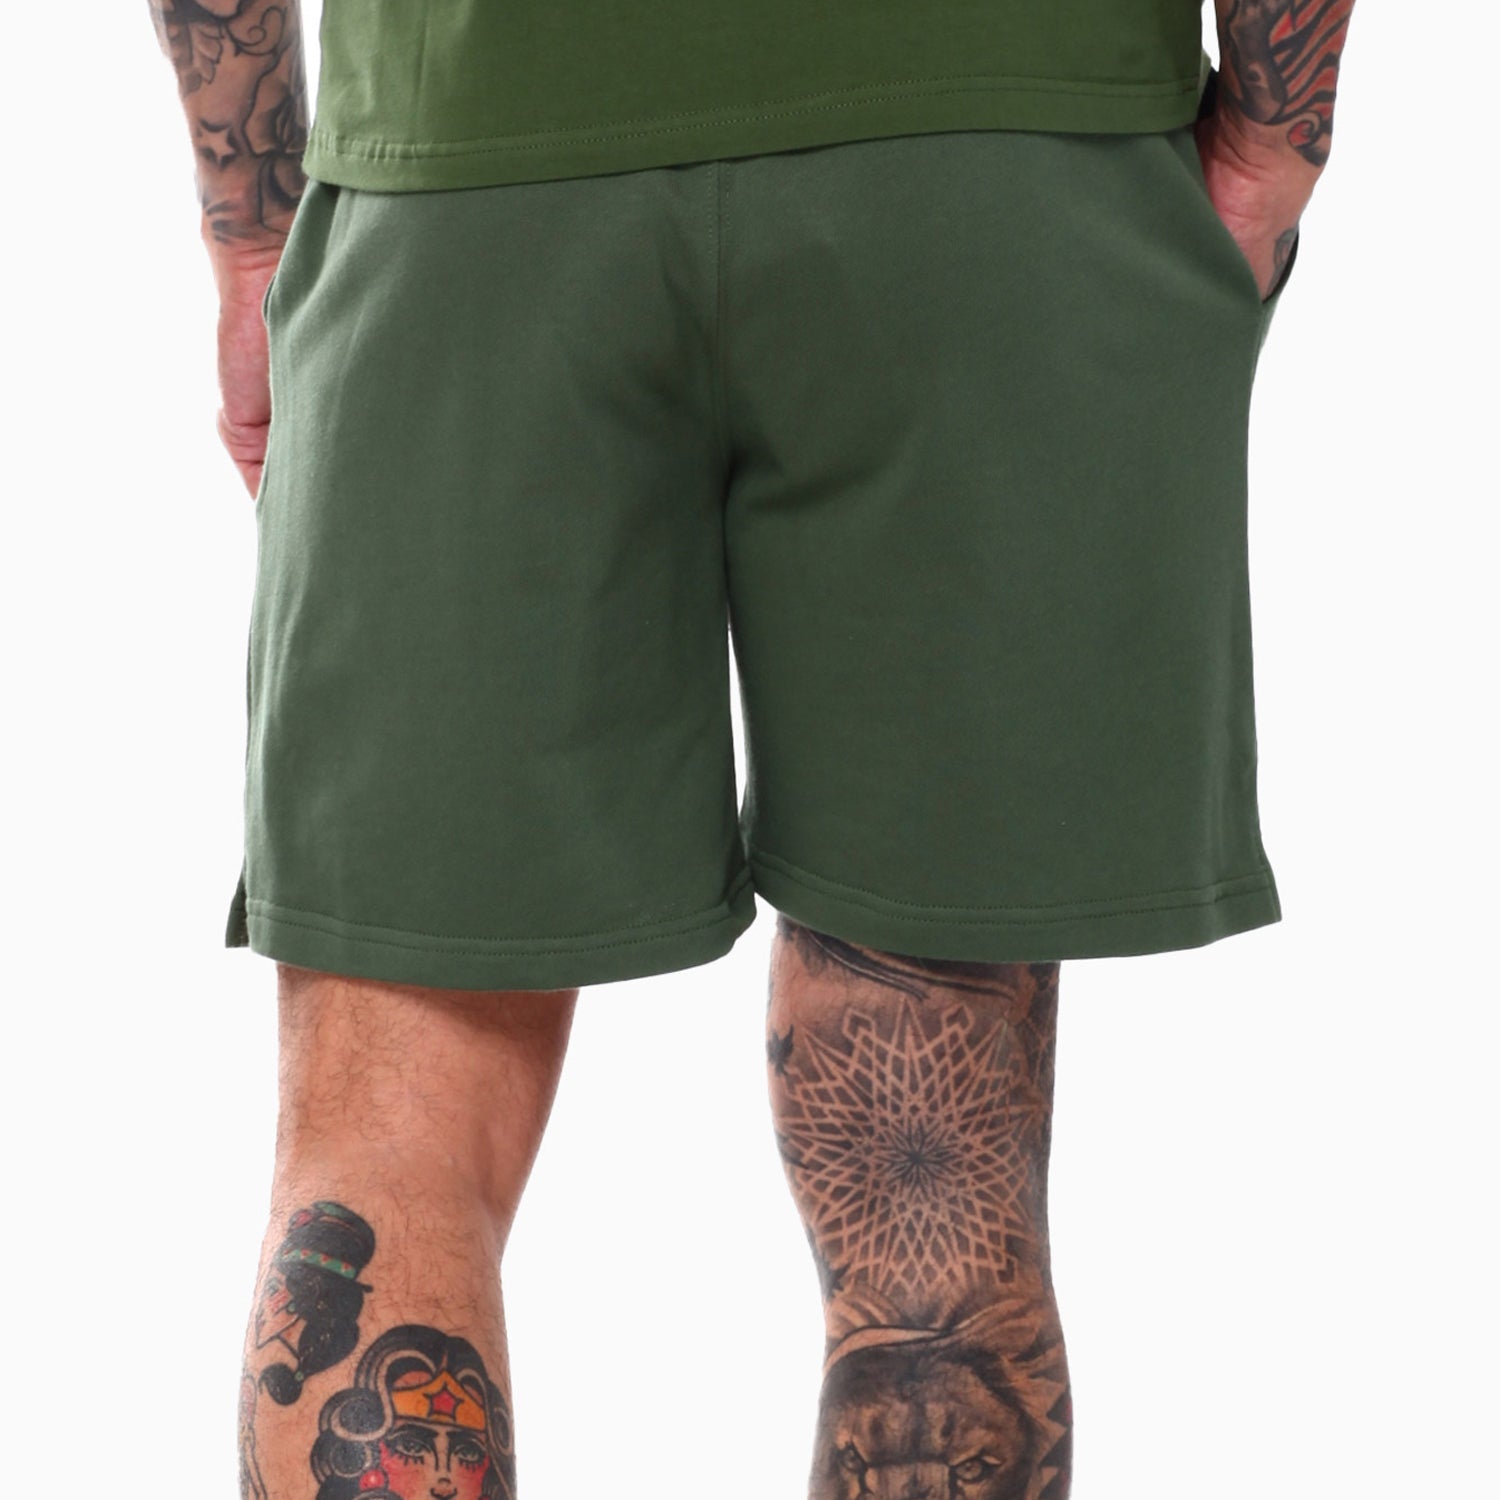 top-gun-mens-embroidered-logo-t-shirt-and-shorts-outfit-tgm2301-green